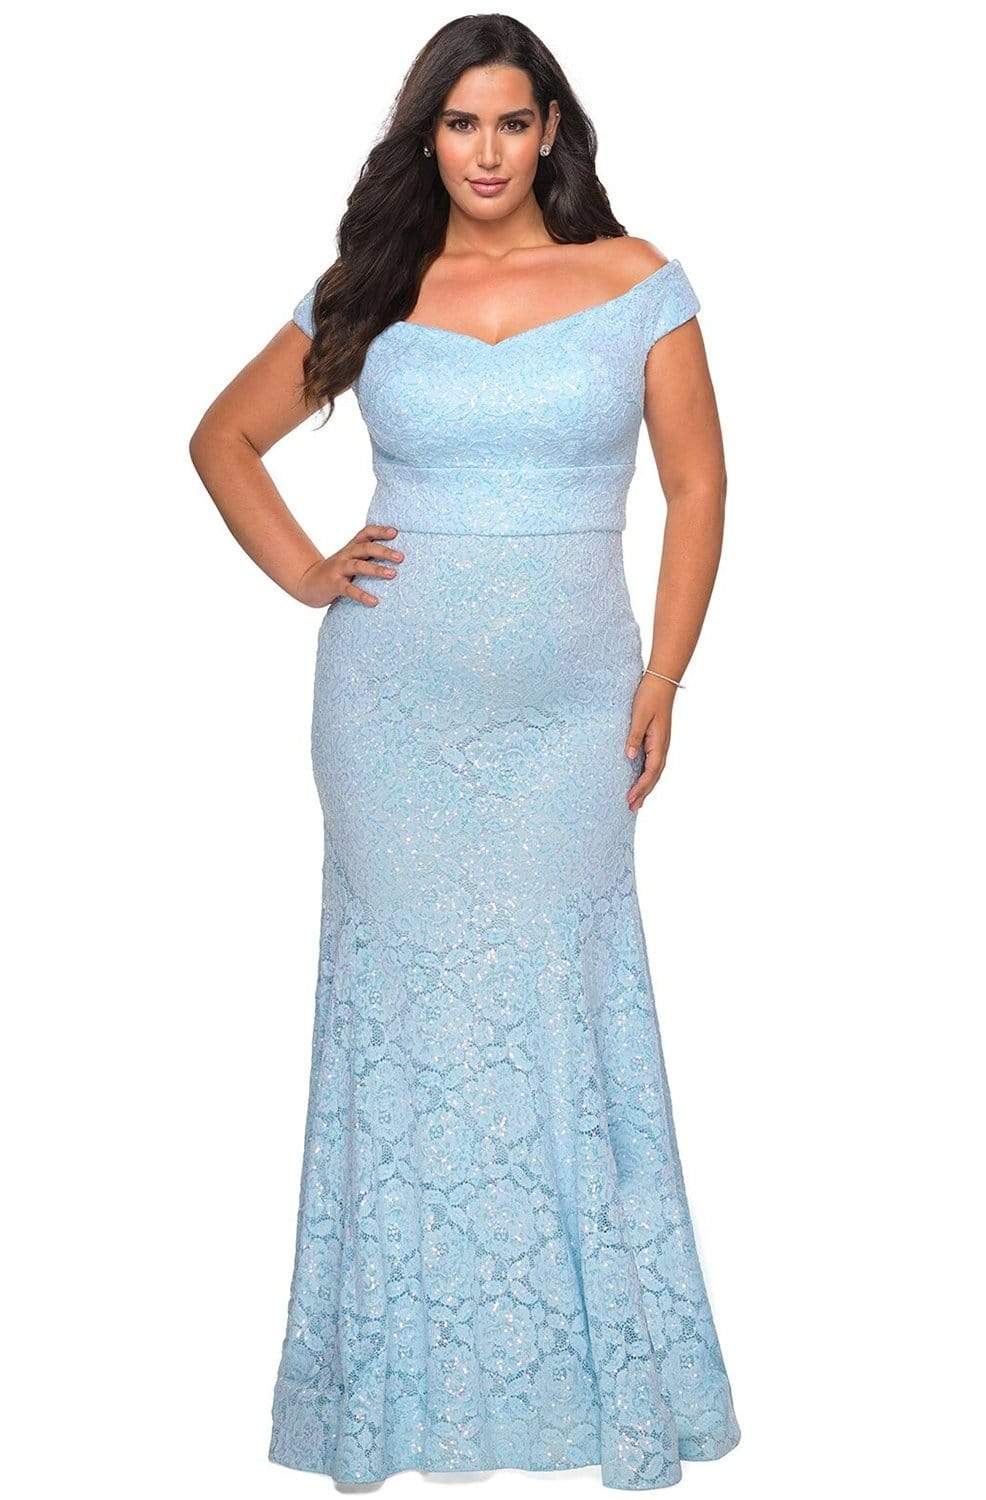 La Femme - 28883 Off Shoulder Beaded Allover Lace Mermaid Gown Prom Dresses 12W / Cloud Blue